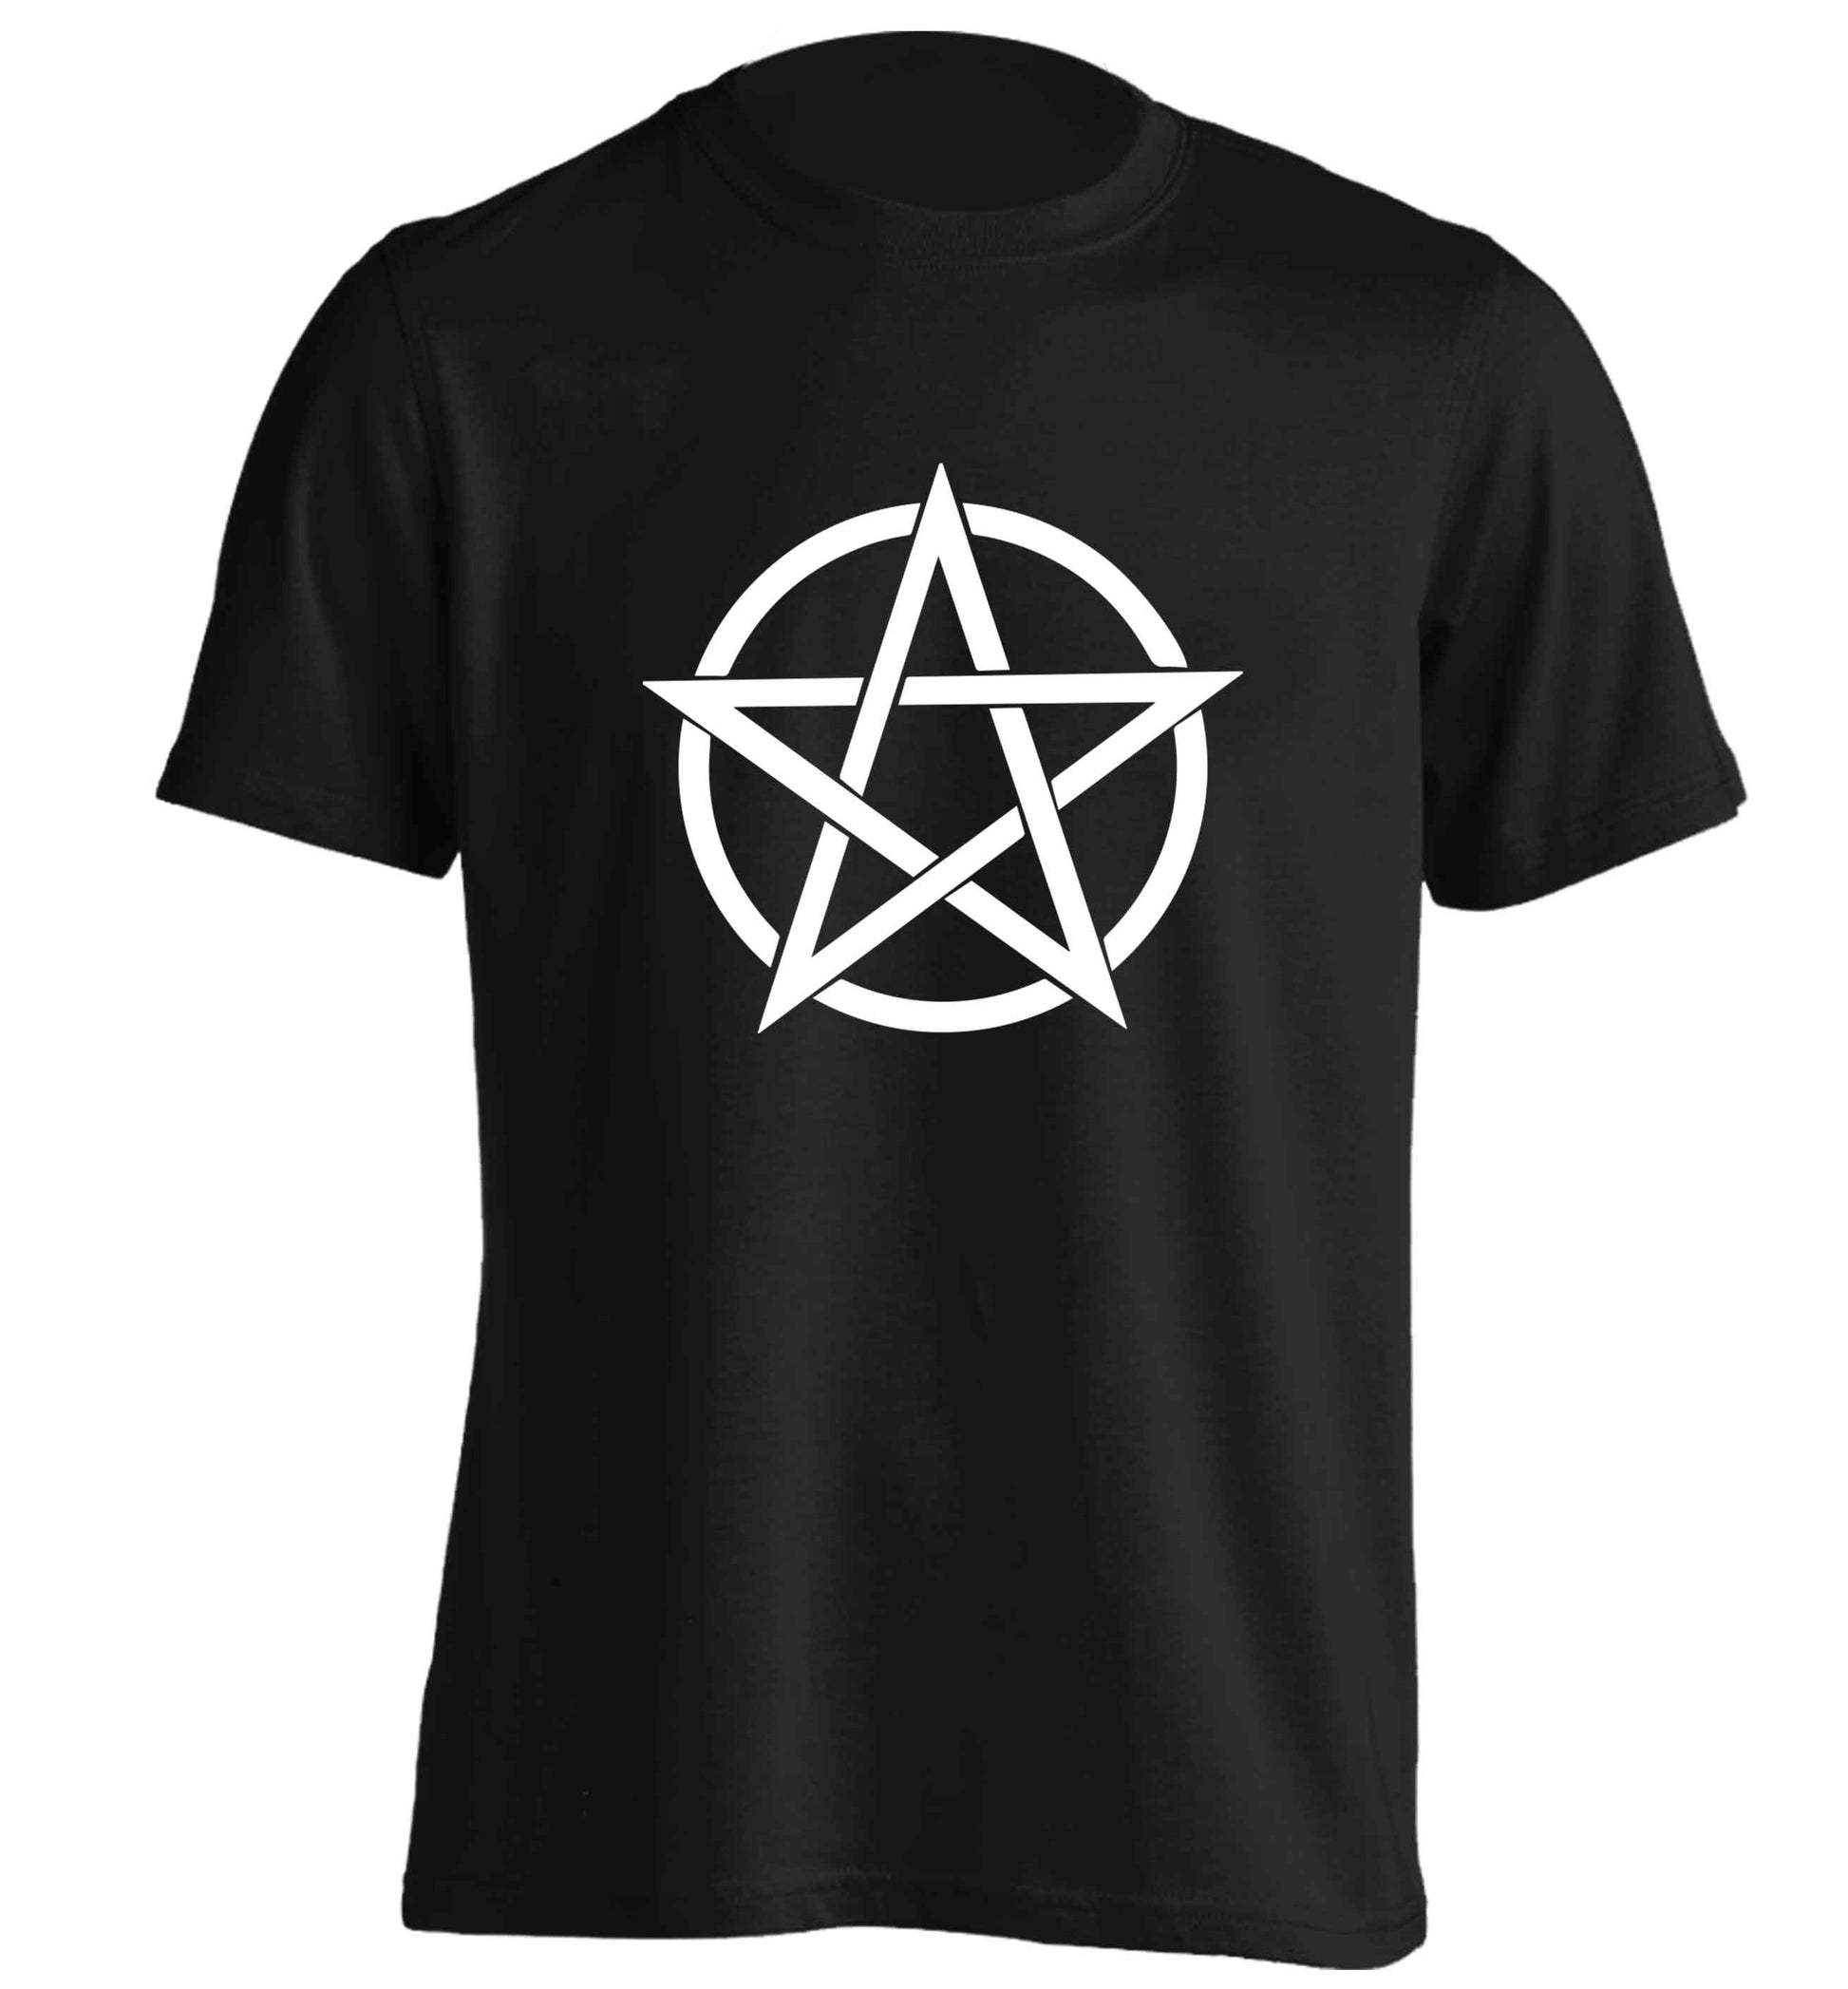 Pentagram symbol adults unisex black Tshirt 2XL